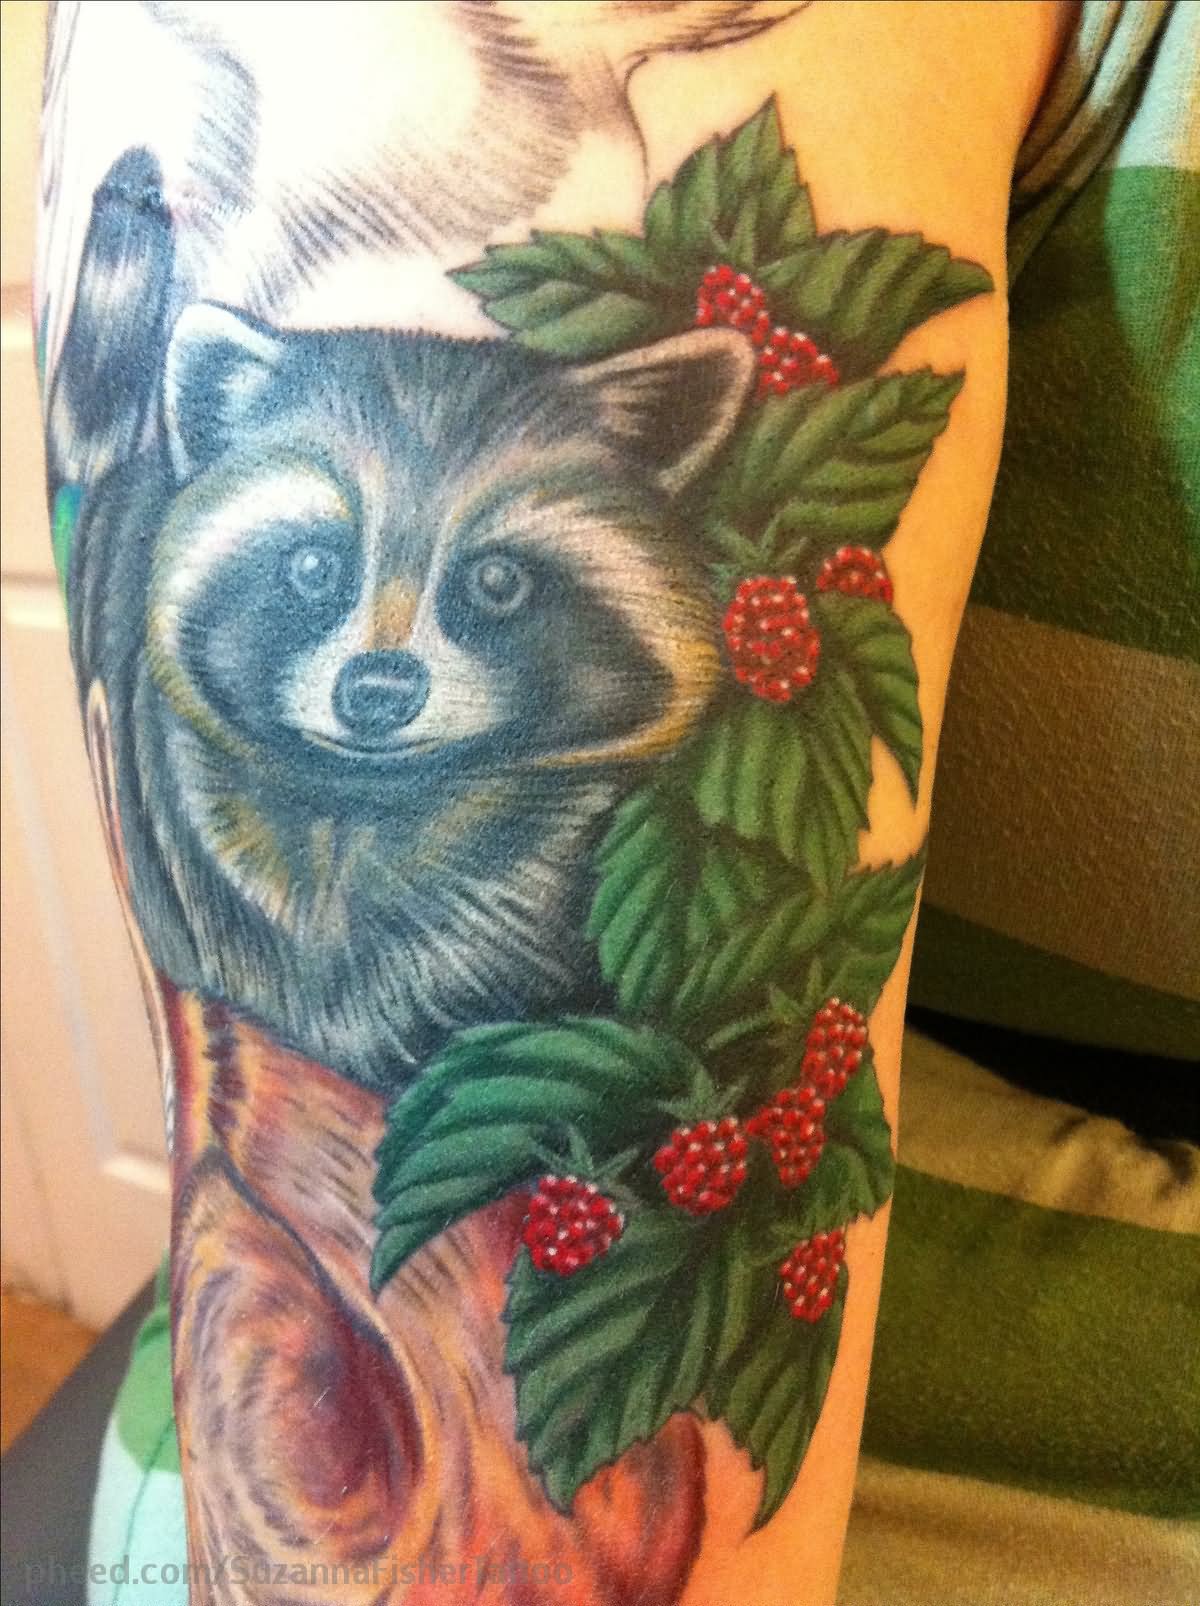 Cherry Fruits And Raccoon Tattoo On Sleeve